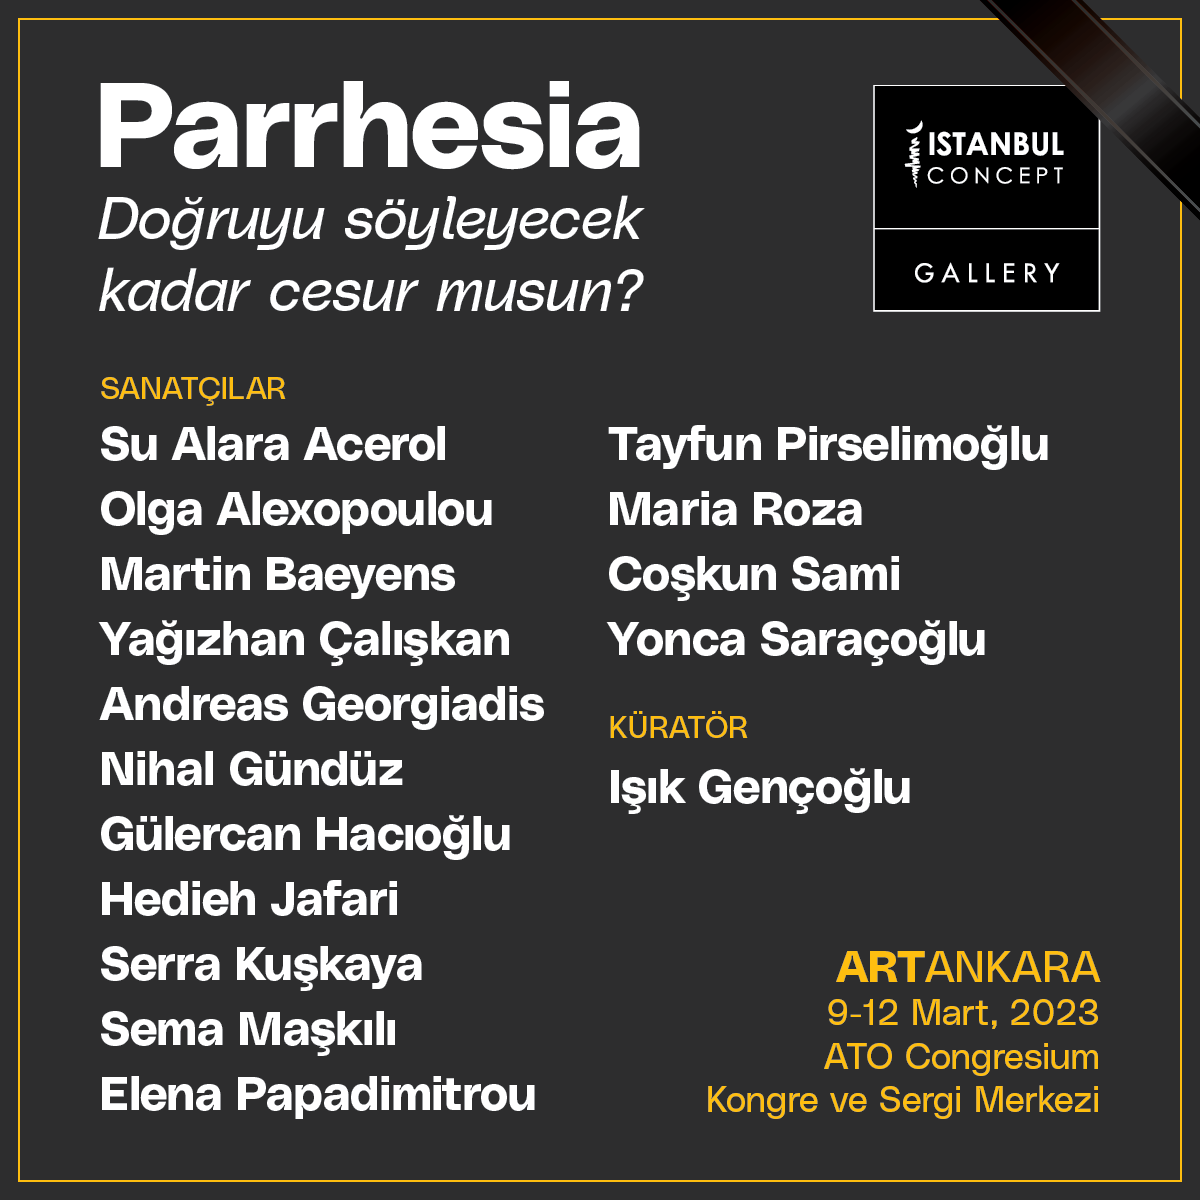 Parrhesia, ArtAnkara, 2023